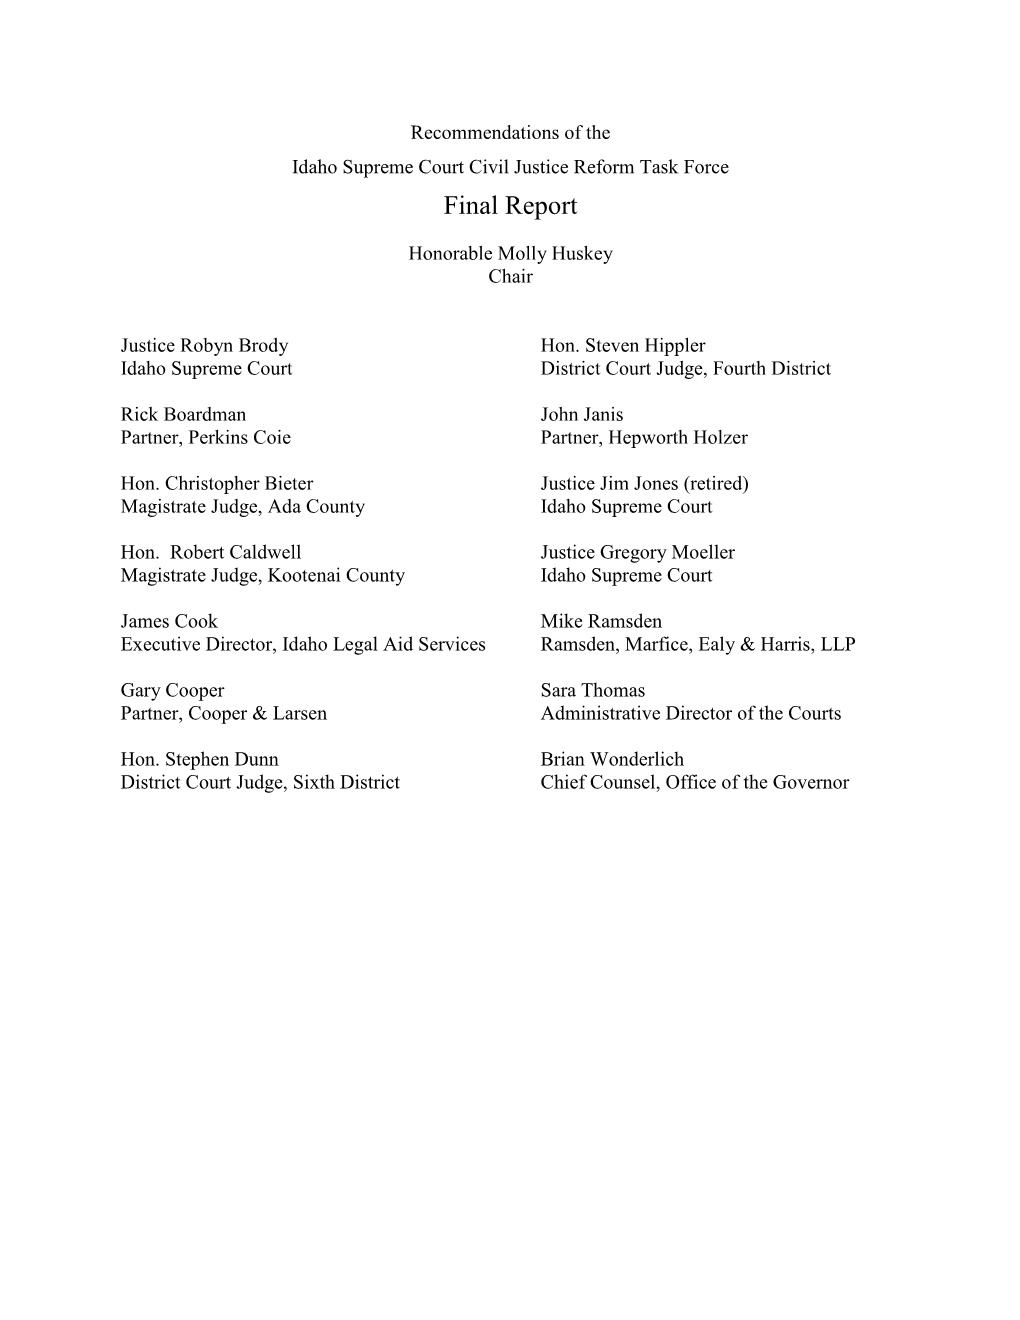 Civil Justice Reform Task Force Final Report